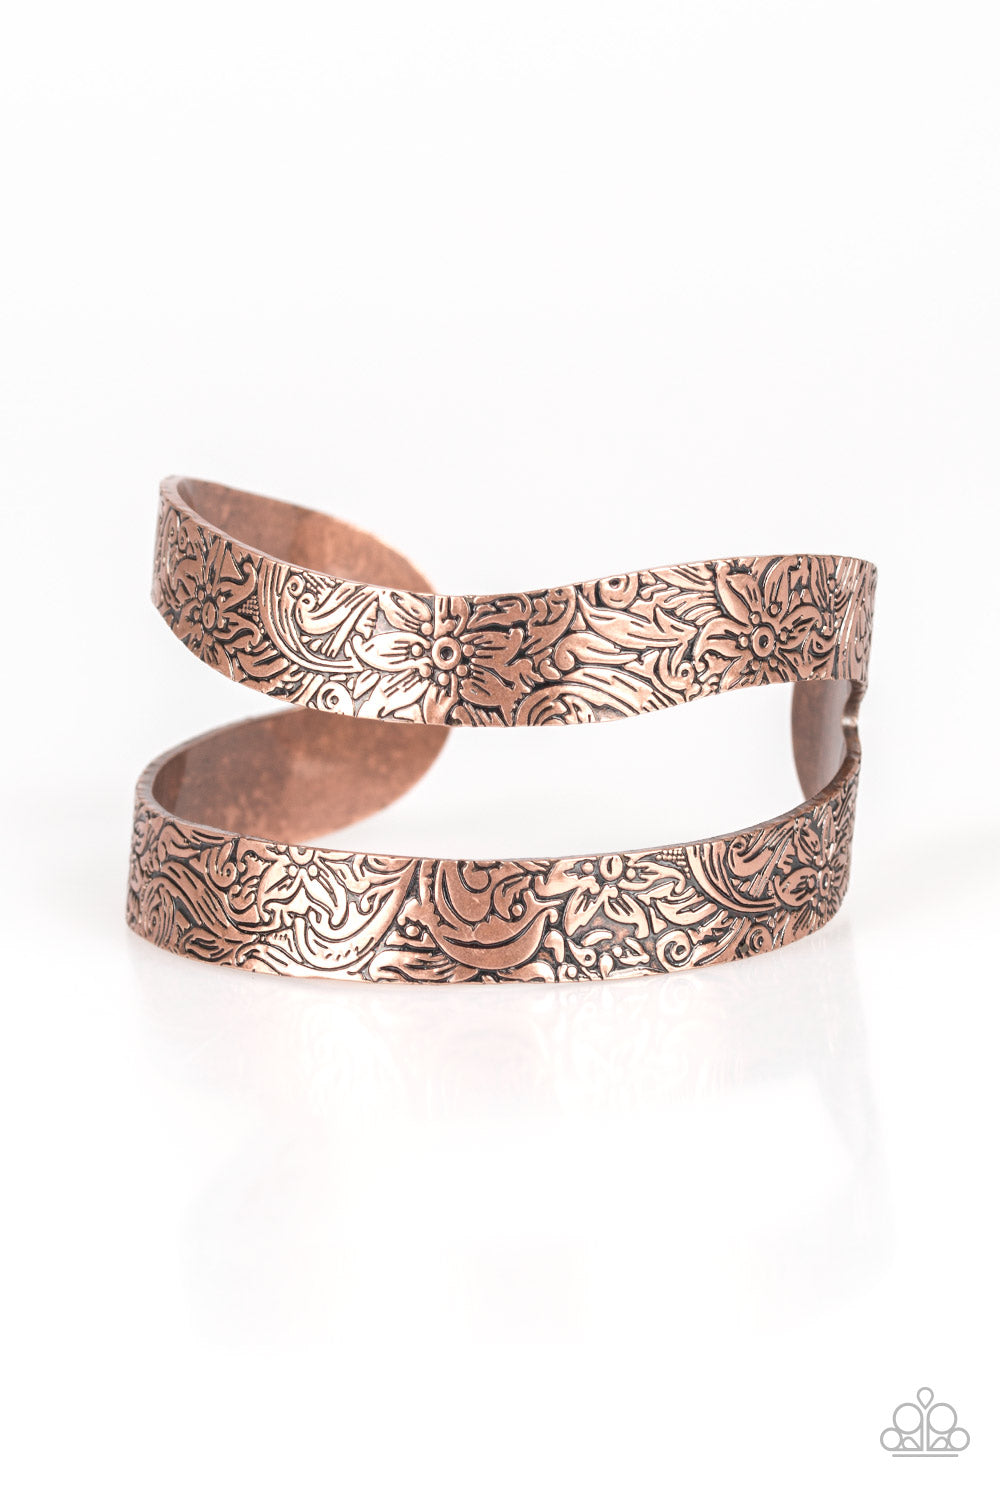 Garden Goddess - Copper Cuff Bracelet